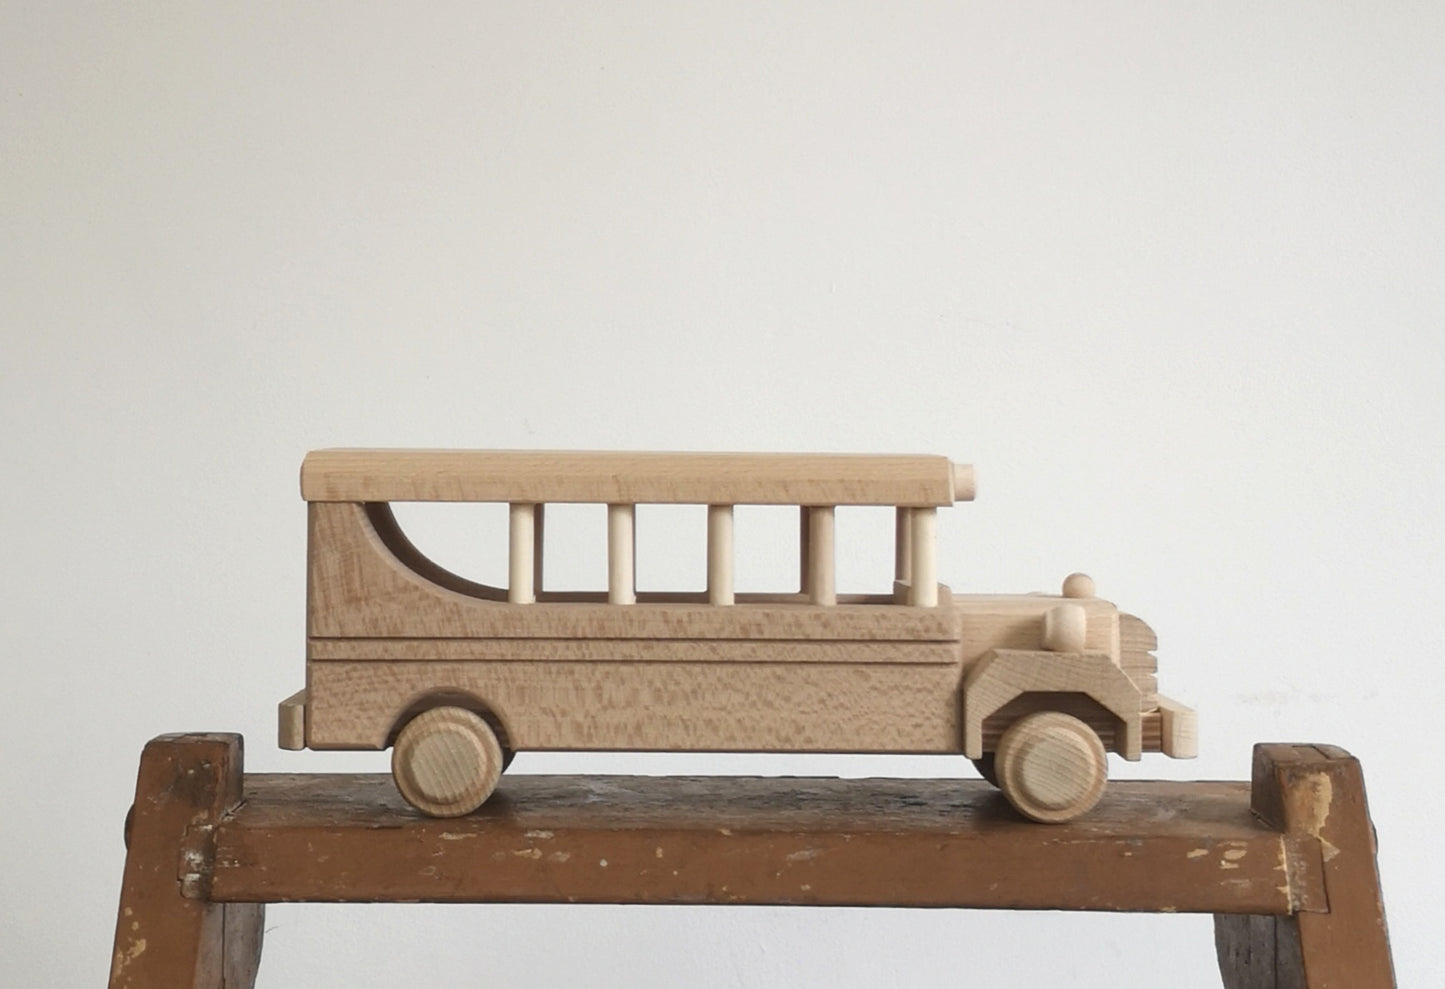 Wooden bus